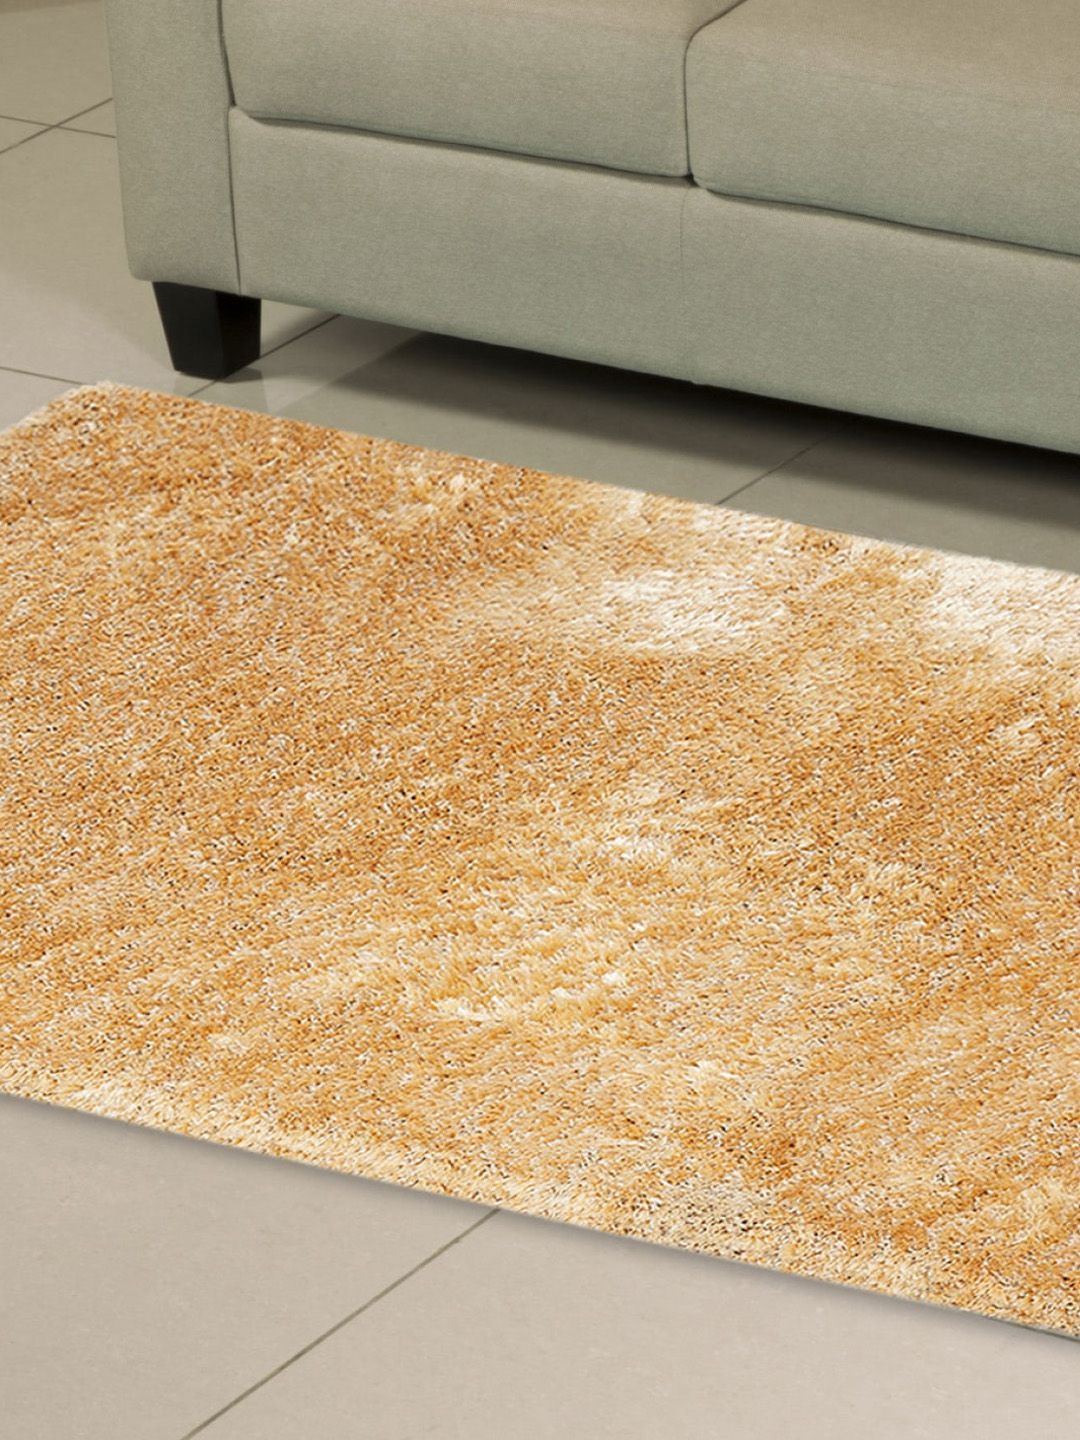 Home Centre Beige Eyelash Textured Area Carpet Price in India